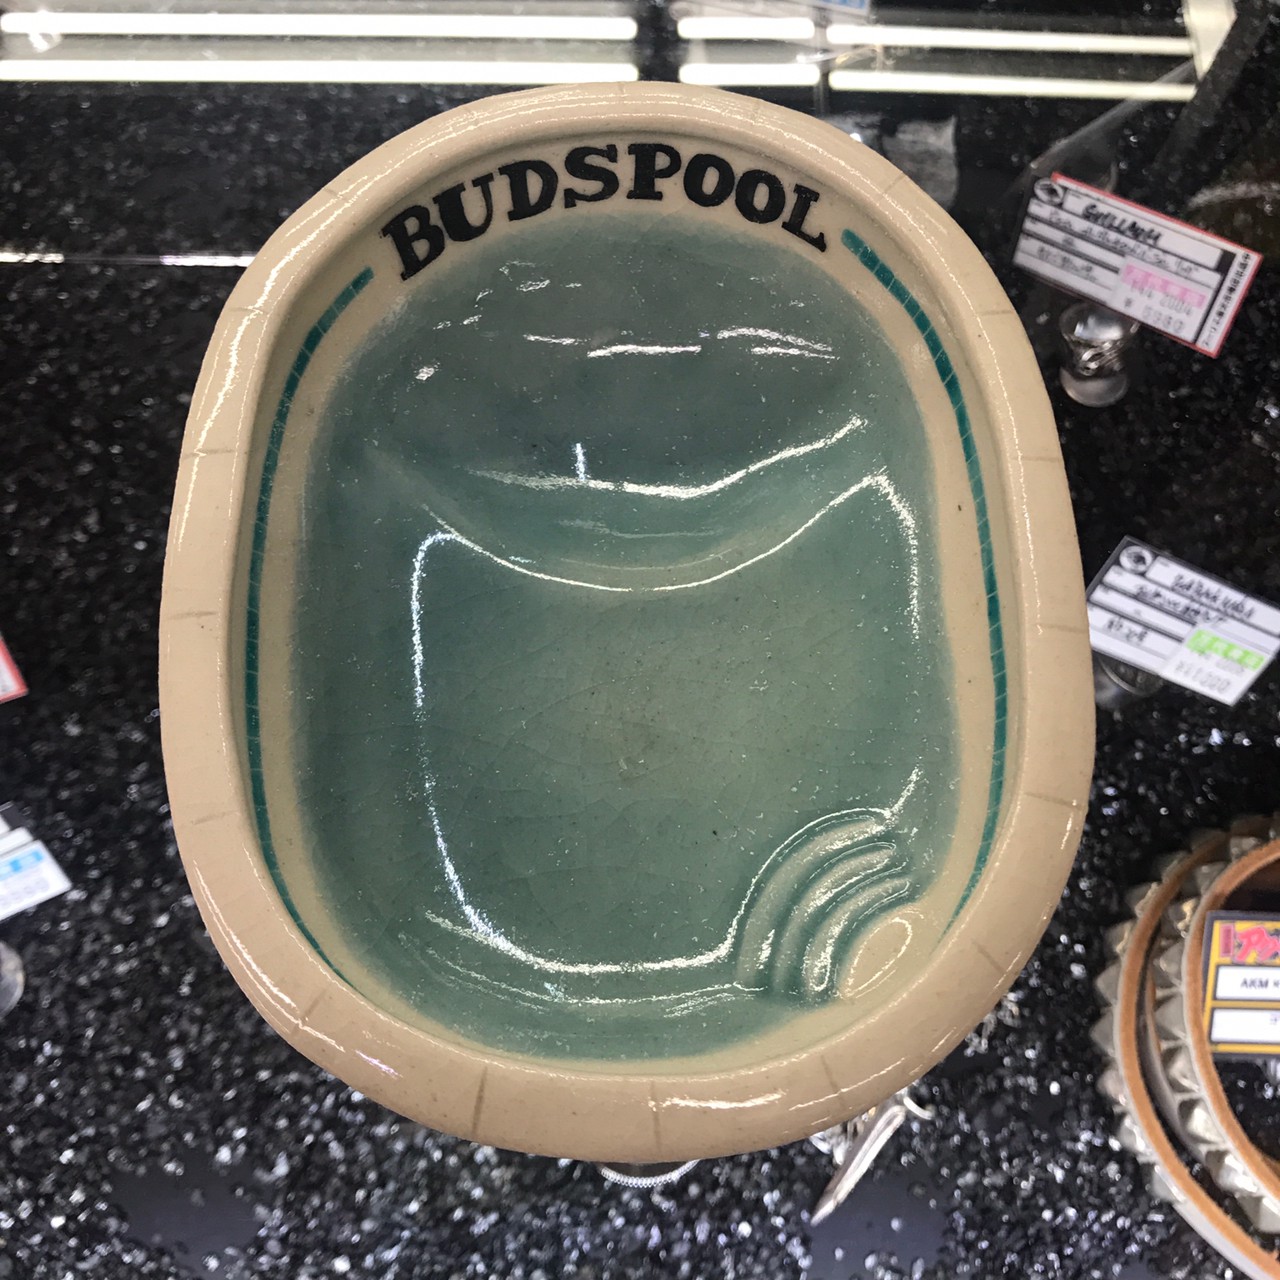 budspool 灰皿-www.pradafarma.com